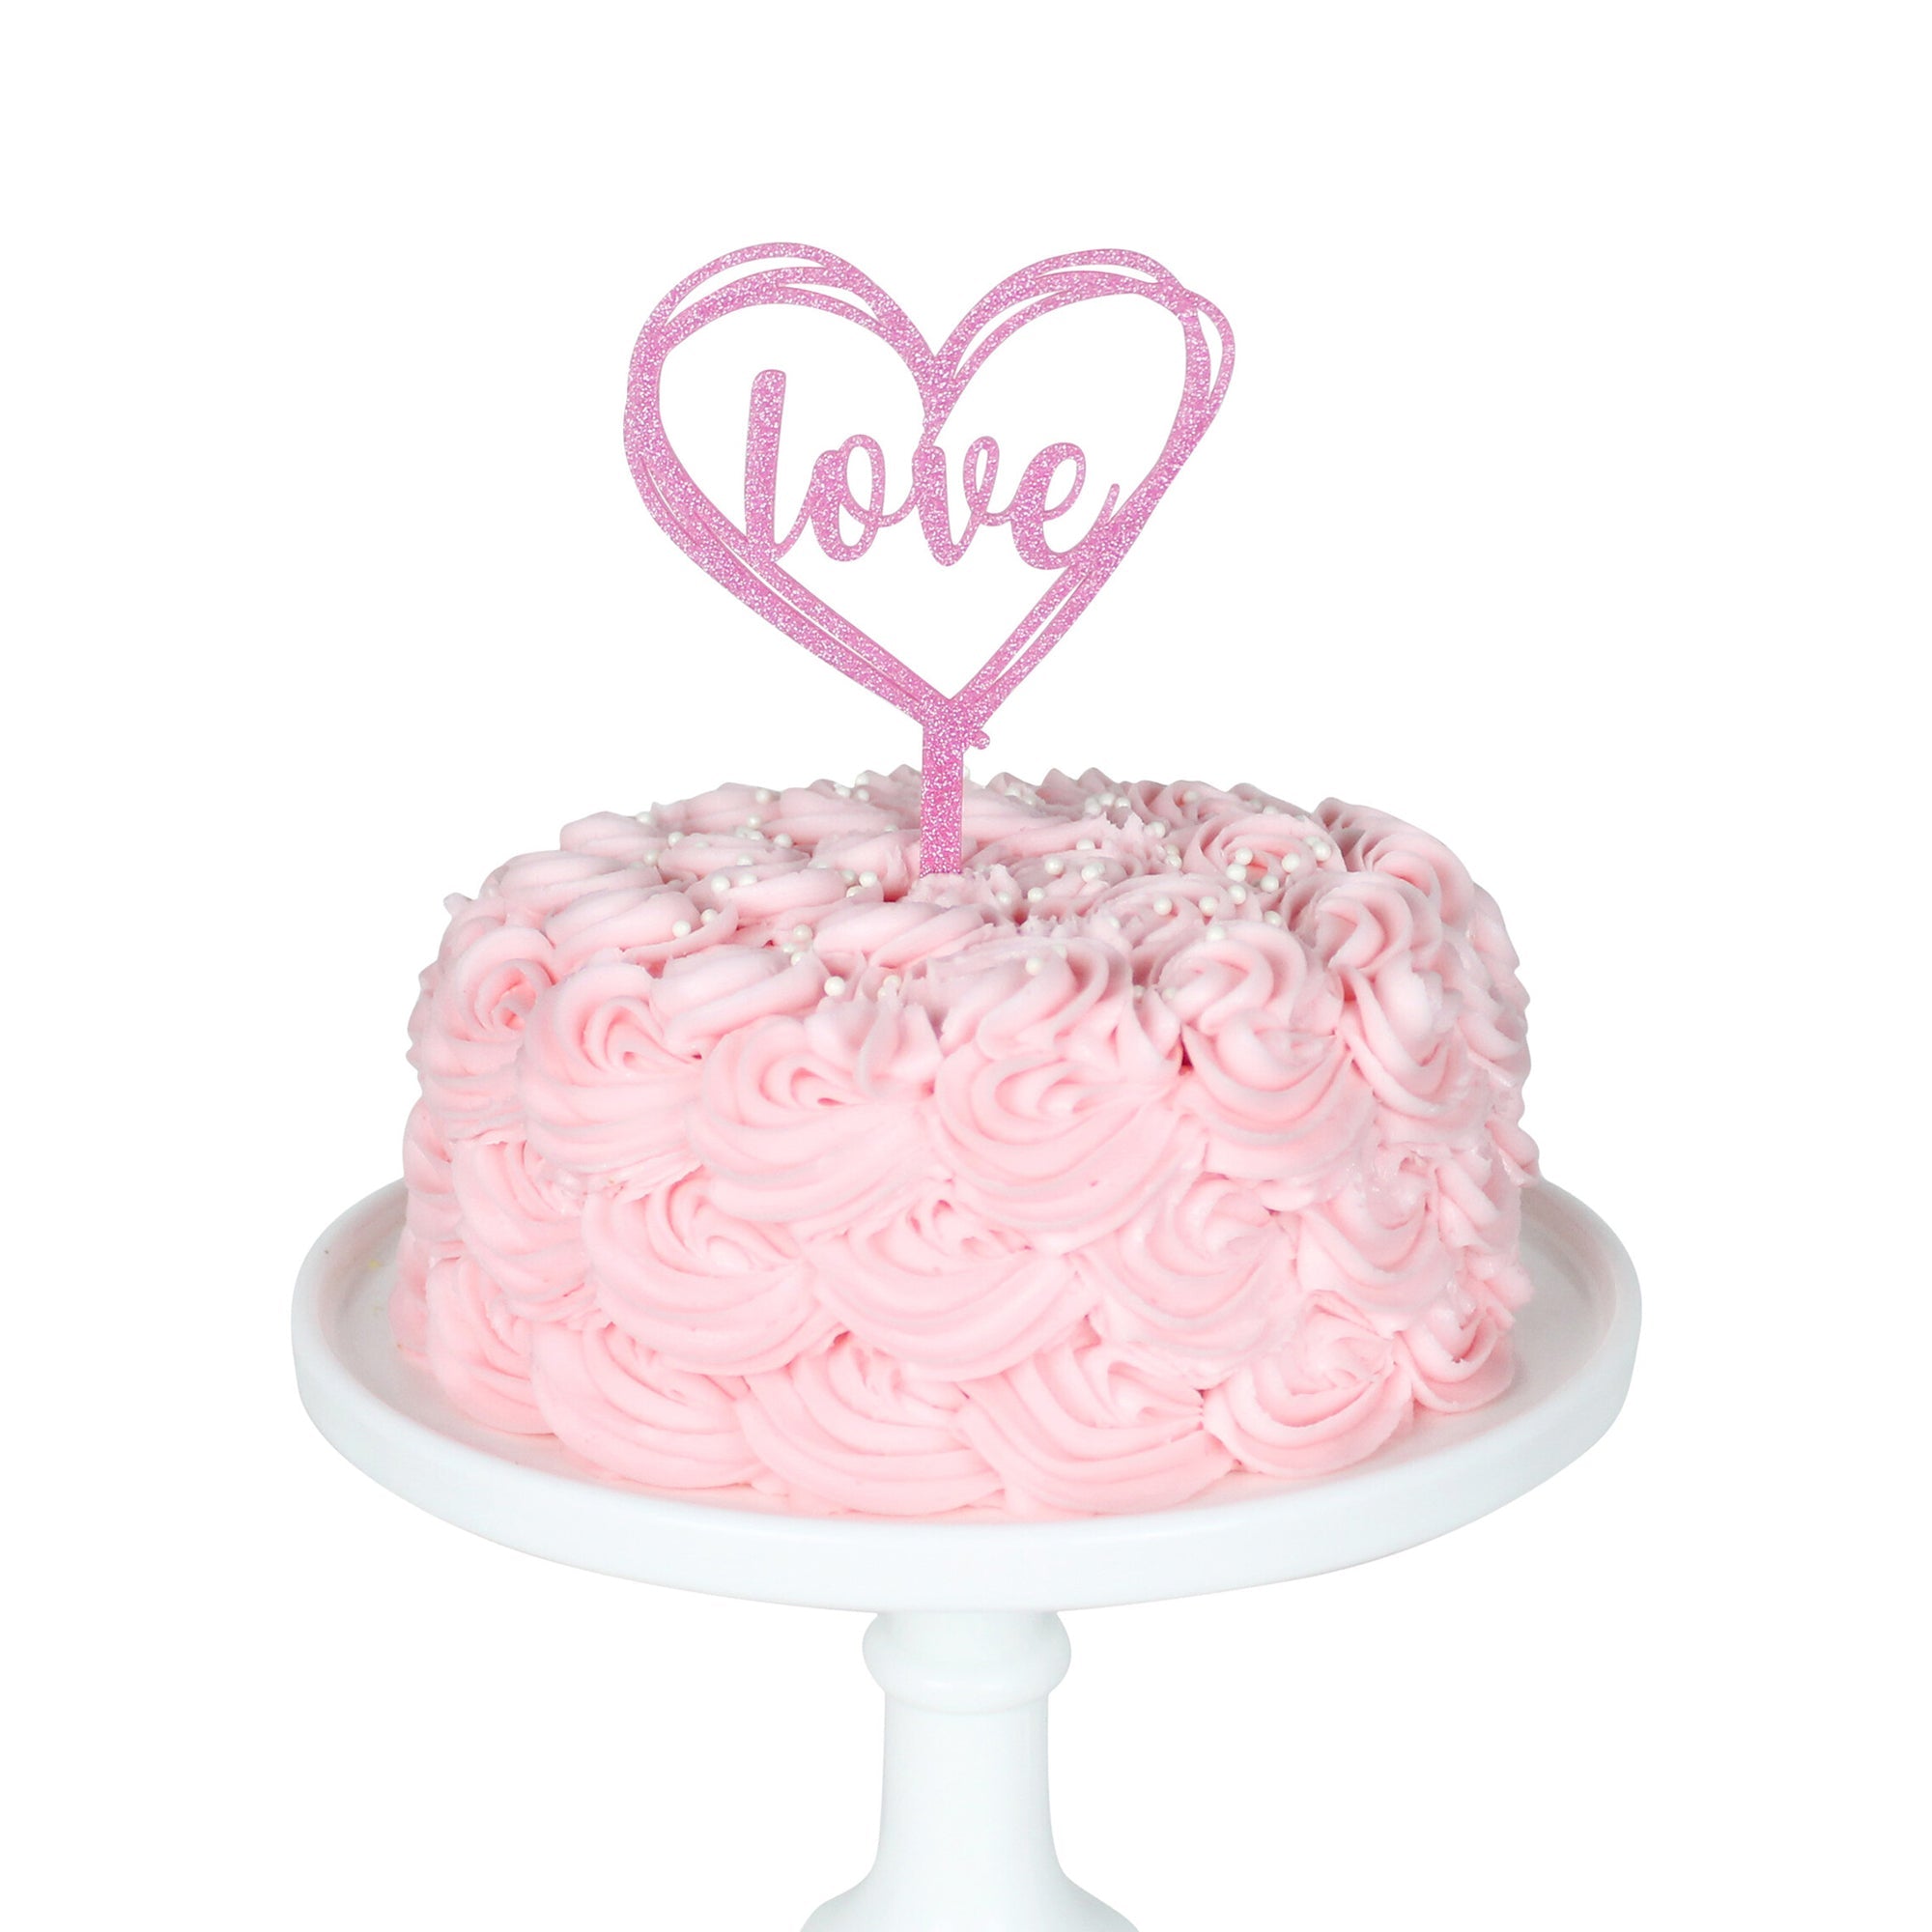 Love - Heart Acrylic Cake Topper In Pink Glitter